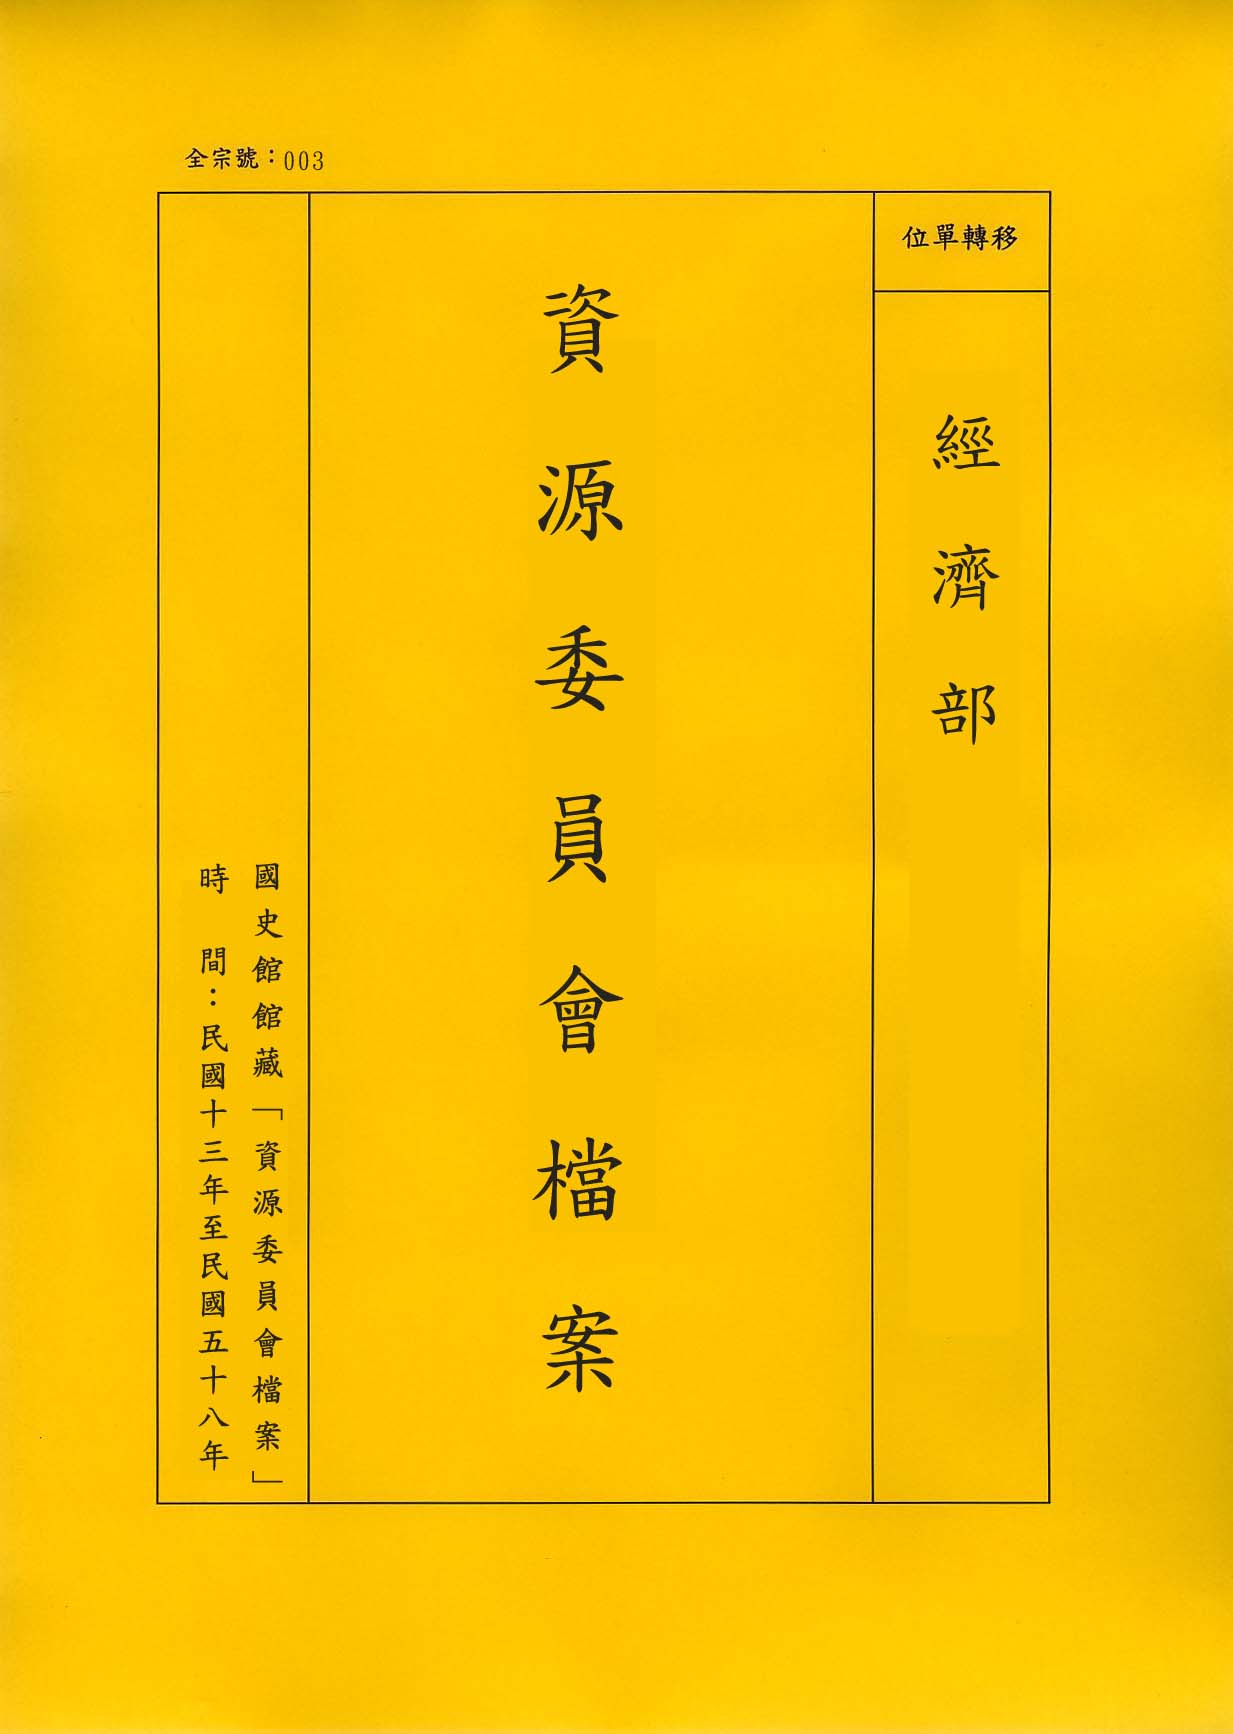 卷名:吳中偉函件及個人資料2655 Letters of Chung-Wei Wu(003-020600-1875)